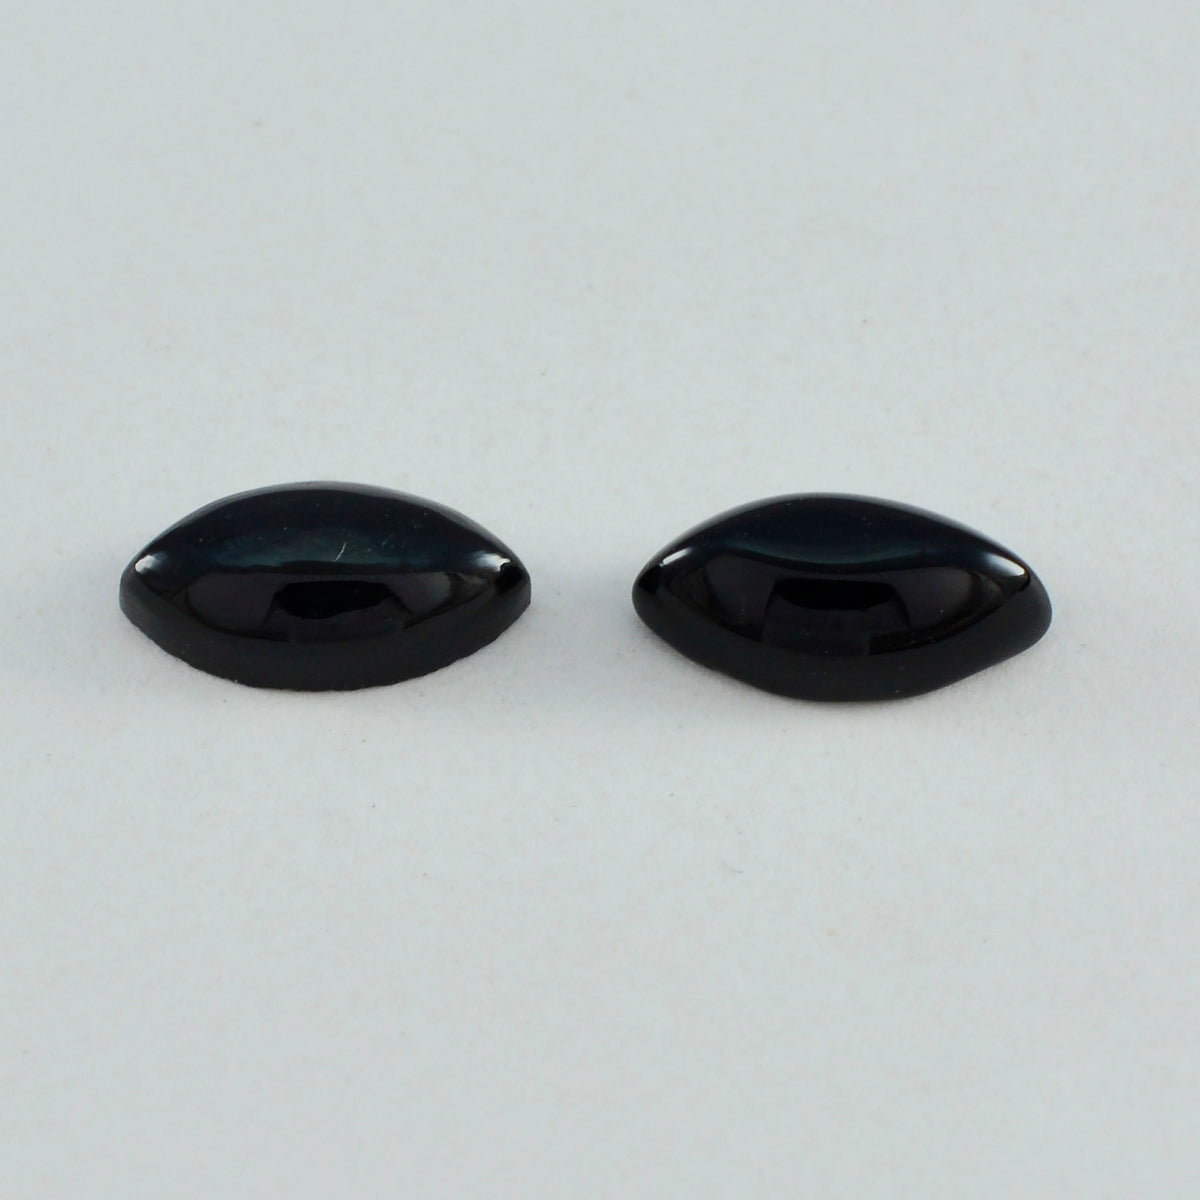 Riyogems 1PC Black Onyx Cabochon 7x14 mm Marquise Shape Good Quality Gemstone